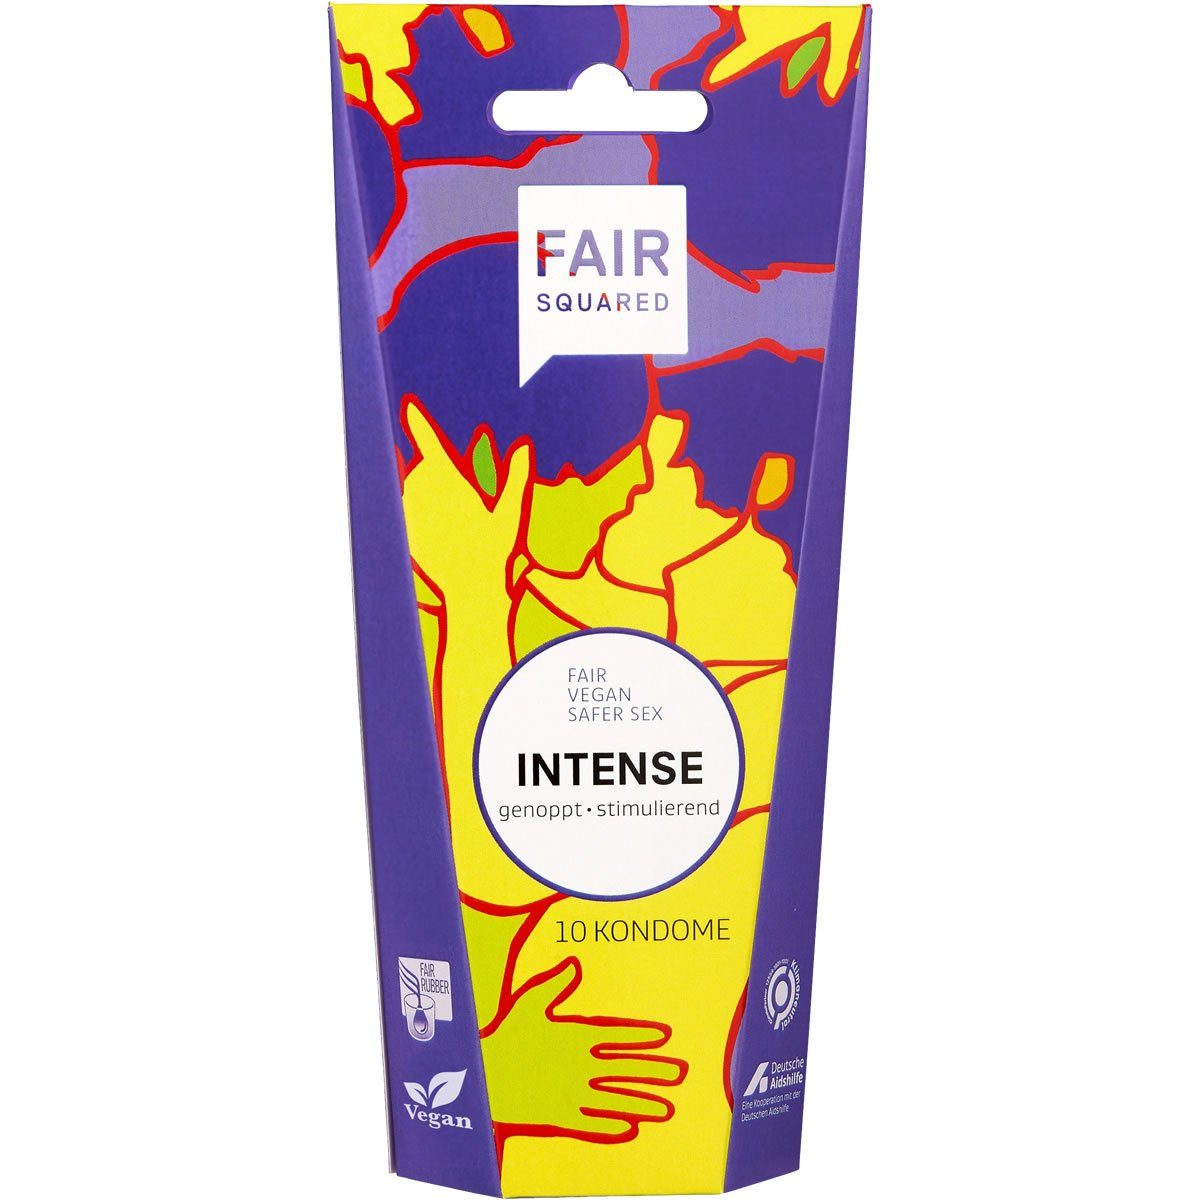 Fair Squared Kondome Celebrate your Love - Intense Packung mit, 10 St., stark genoppte Kondome, vegane und stimulierende Fair-Trade-Kondome